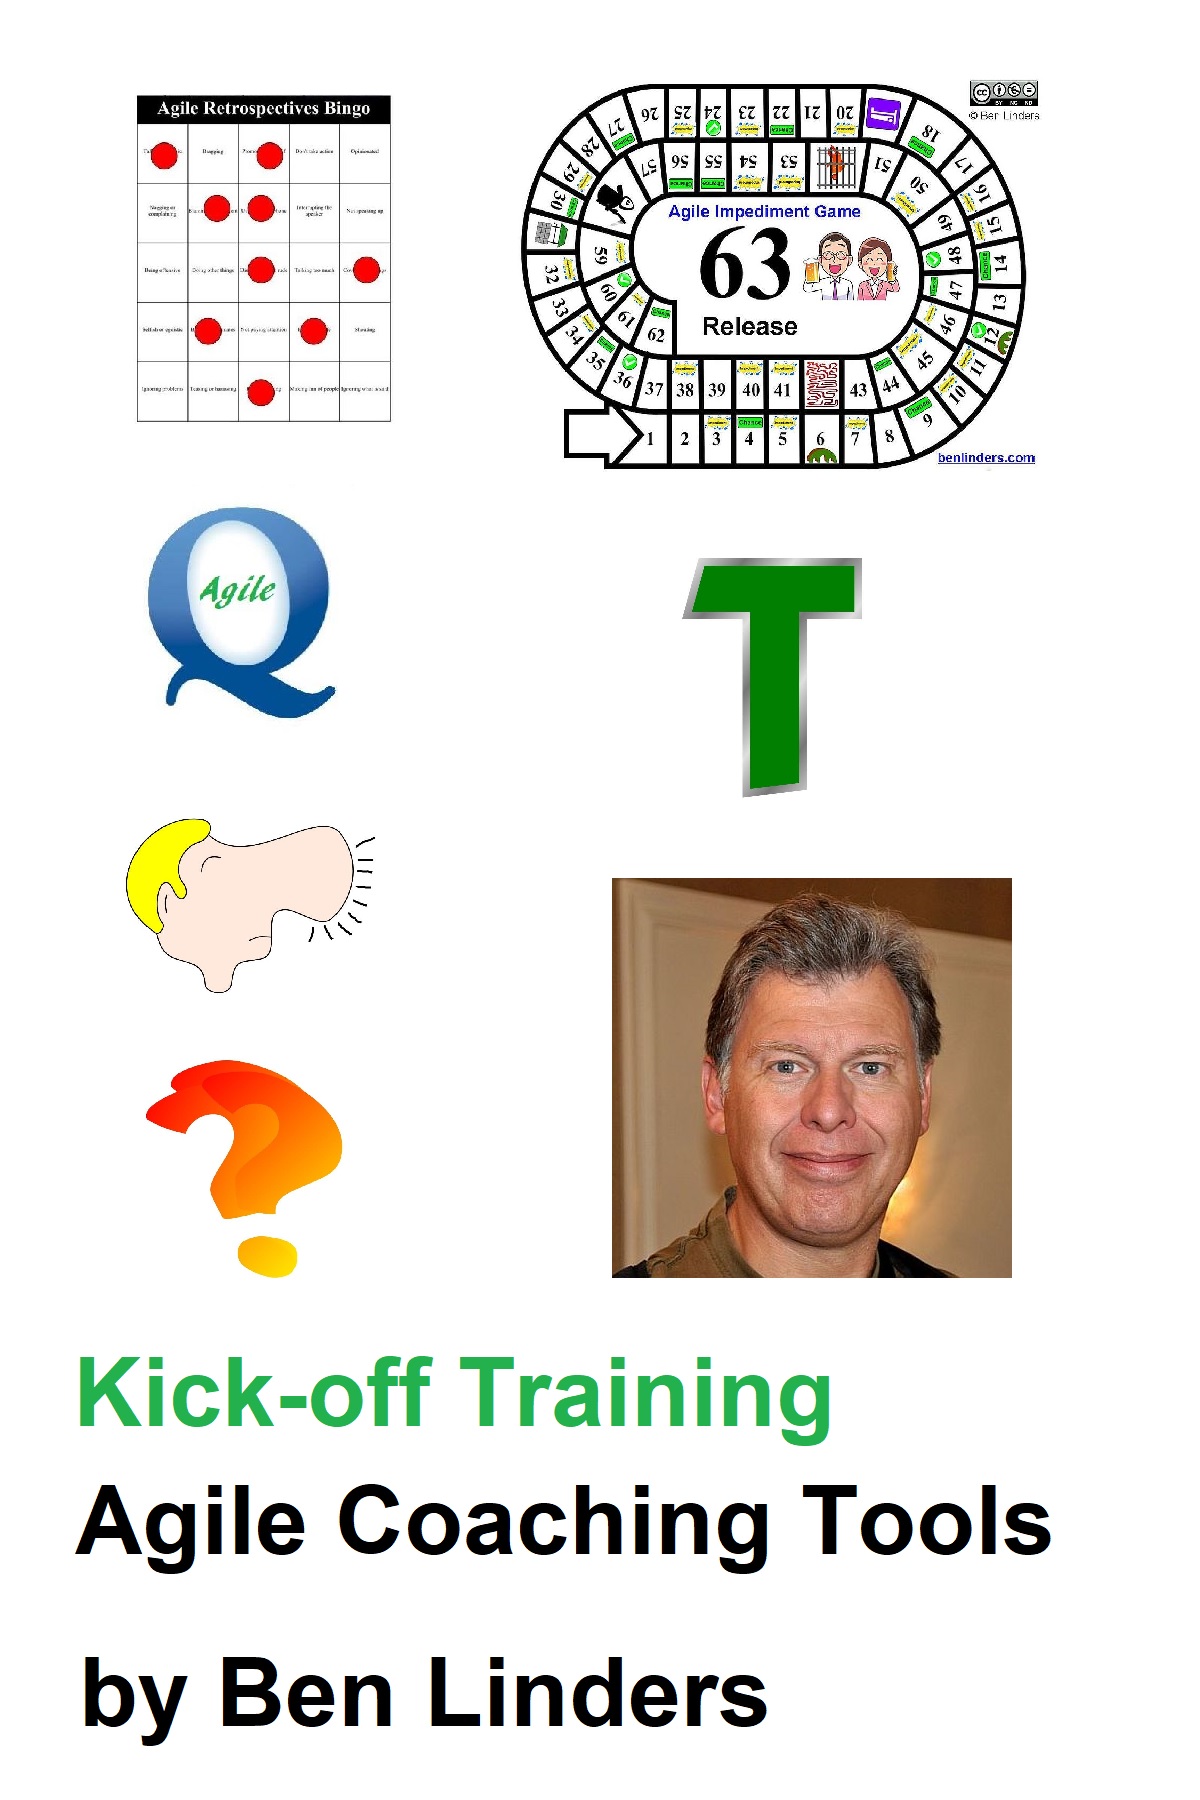 Kick-off Training for Agile Coaching Tools